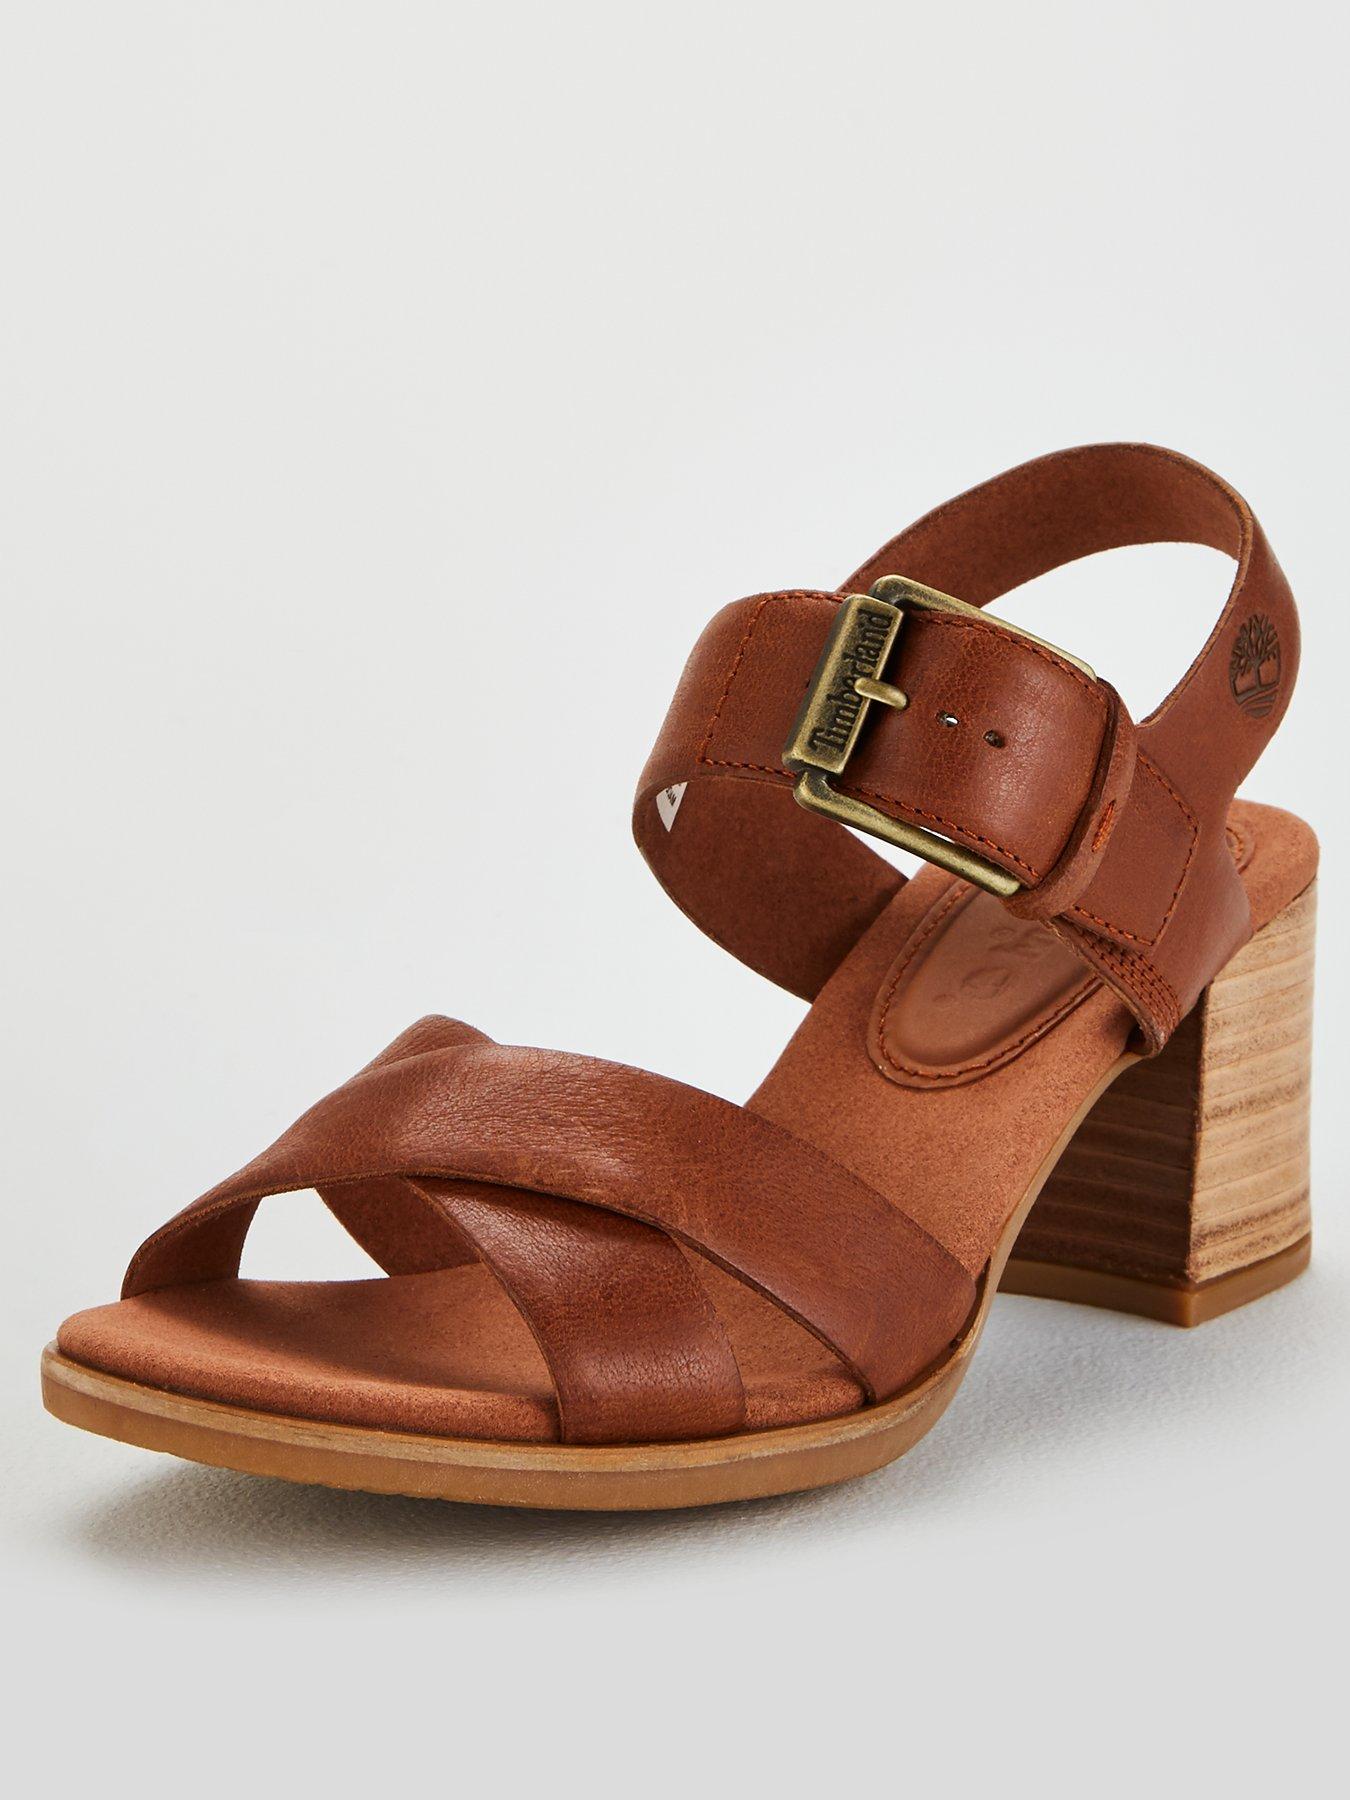 clarks ladies summer sandals